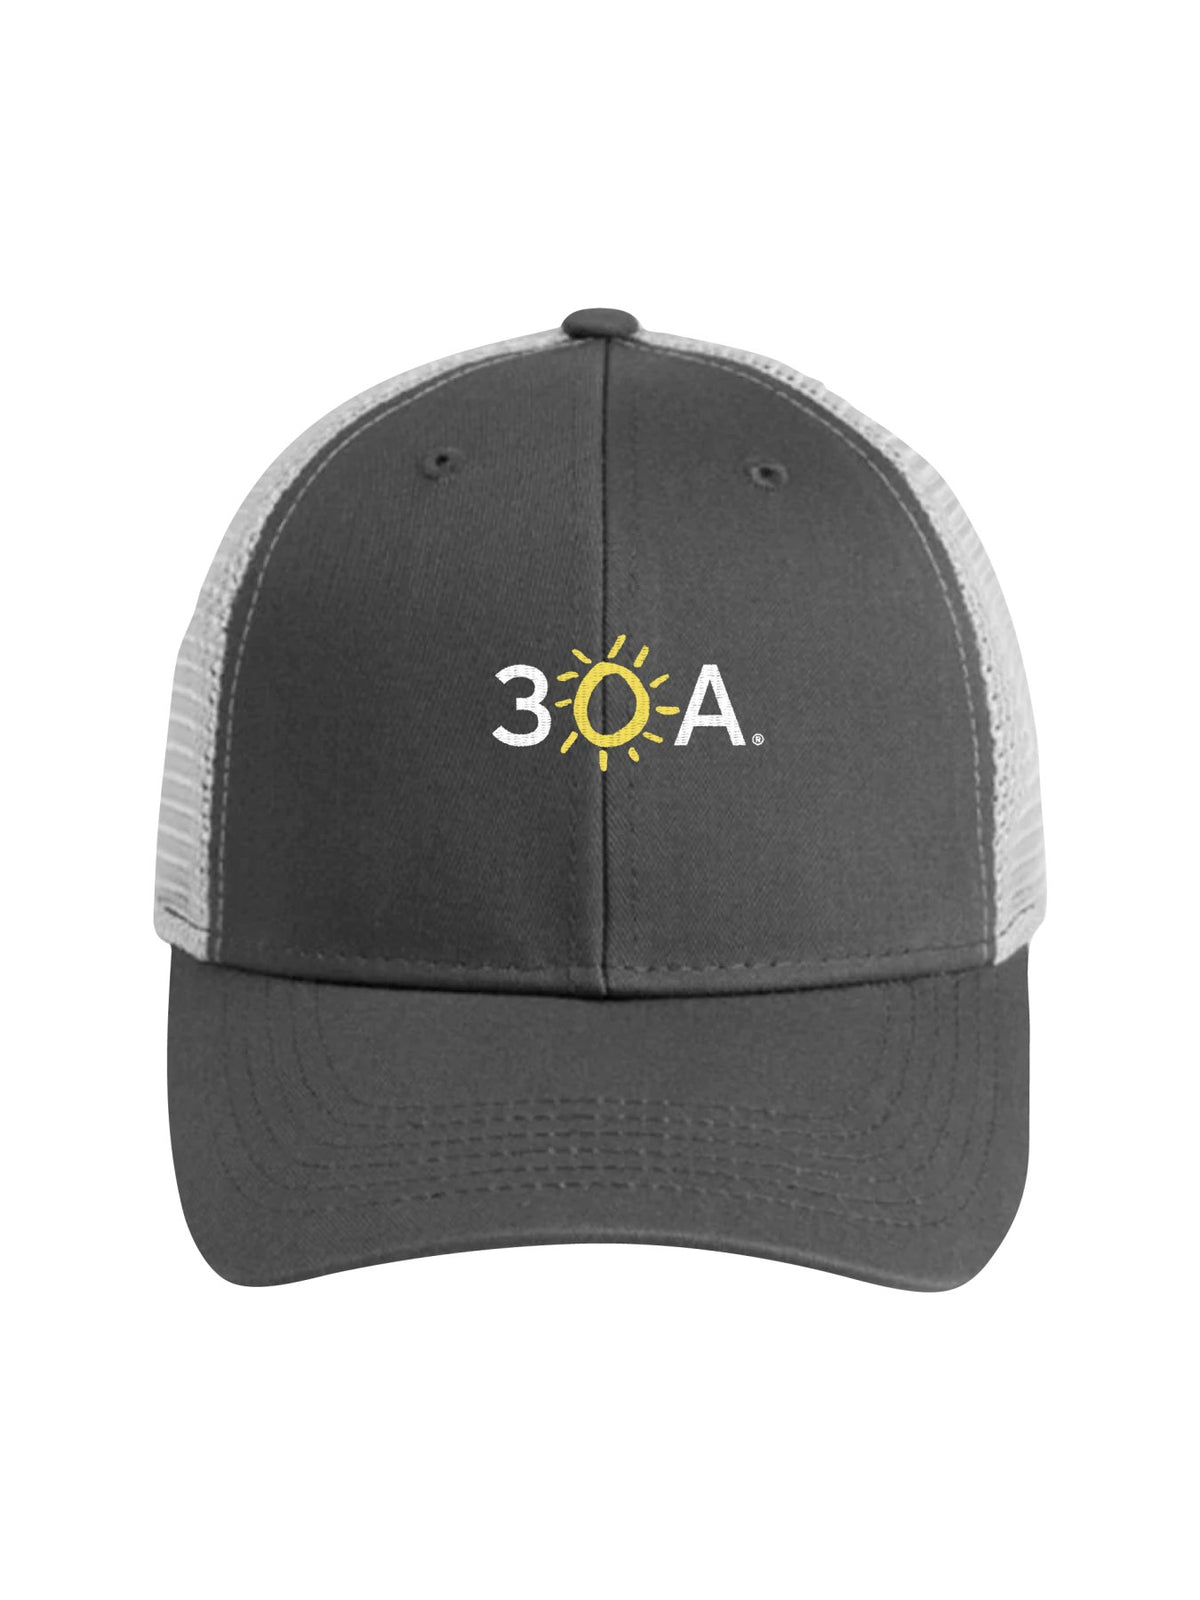 30A Wordmark Beach Happy Trucker Hat - 30A Gear - caps adjustable